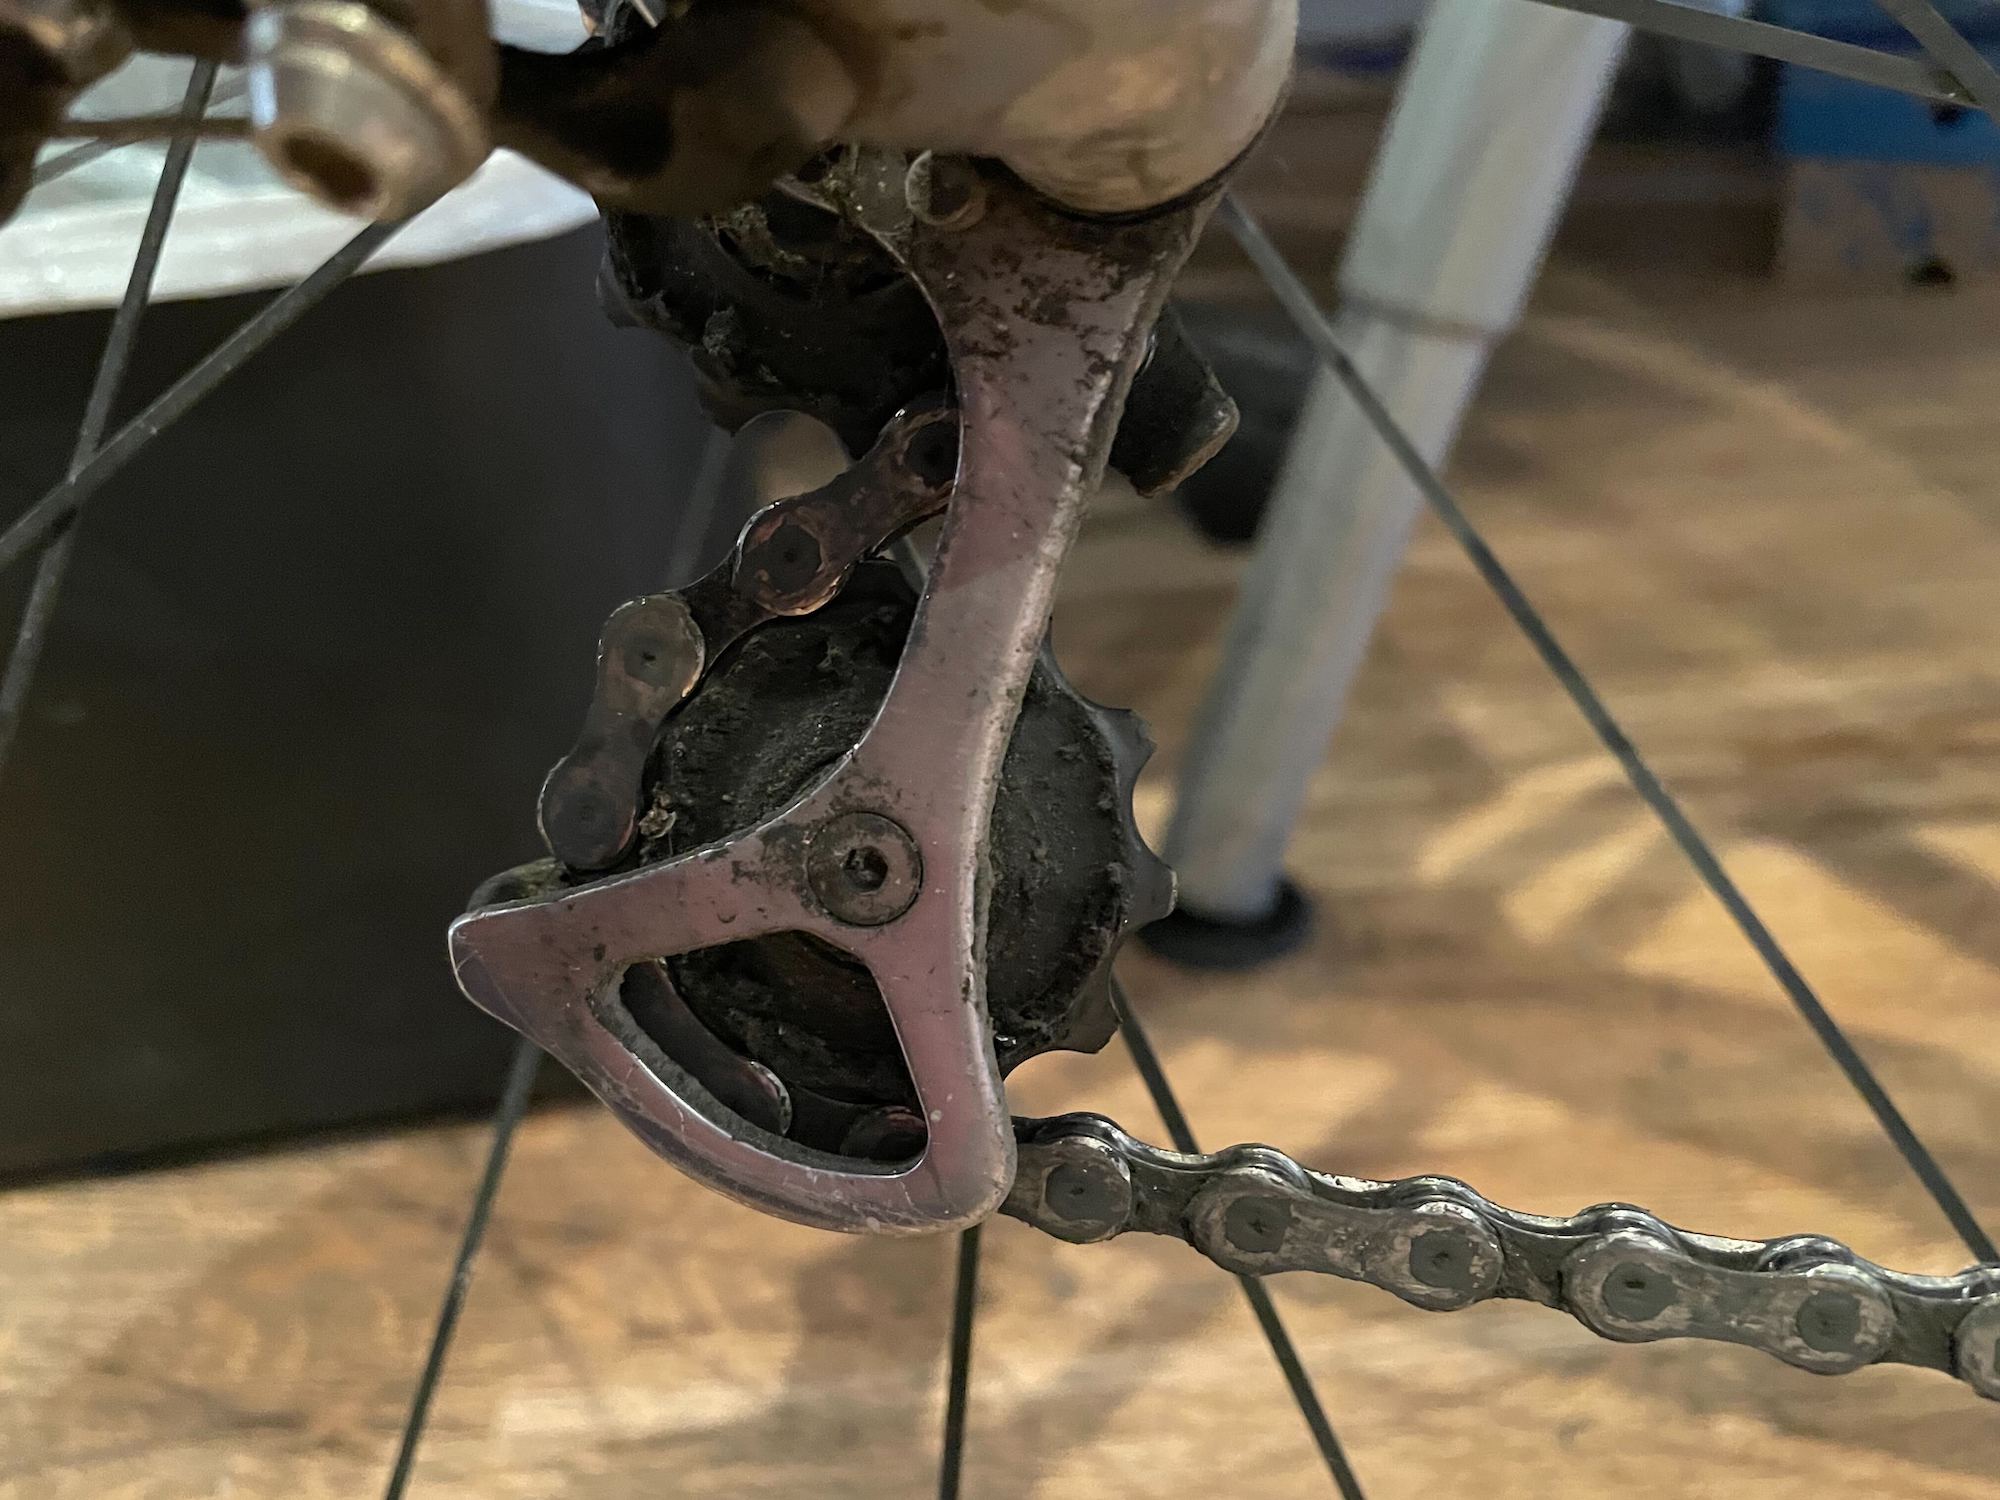 https://cyclingmagazine.ca/wp-content/uploads/2022/07/Dirty-pulley-wheels-.jpg